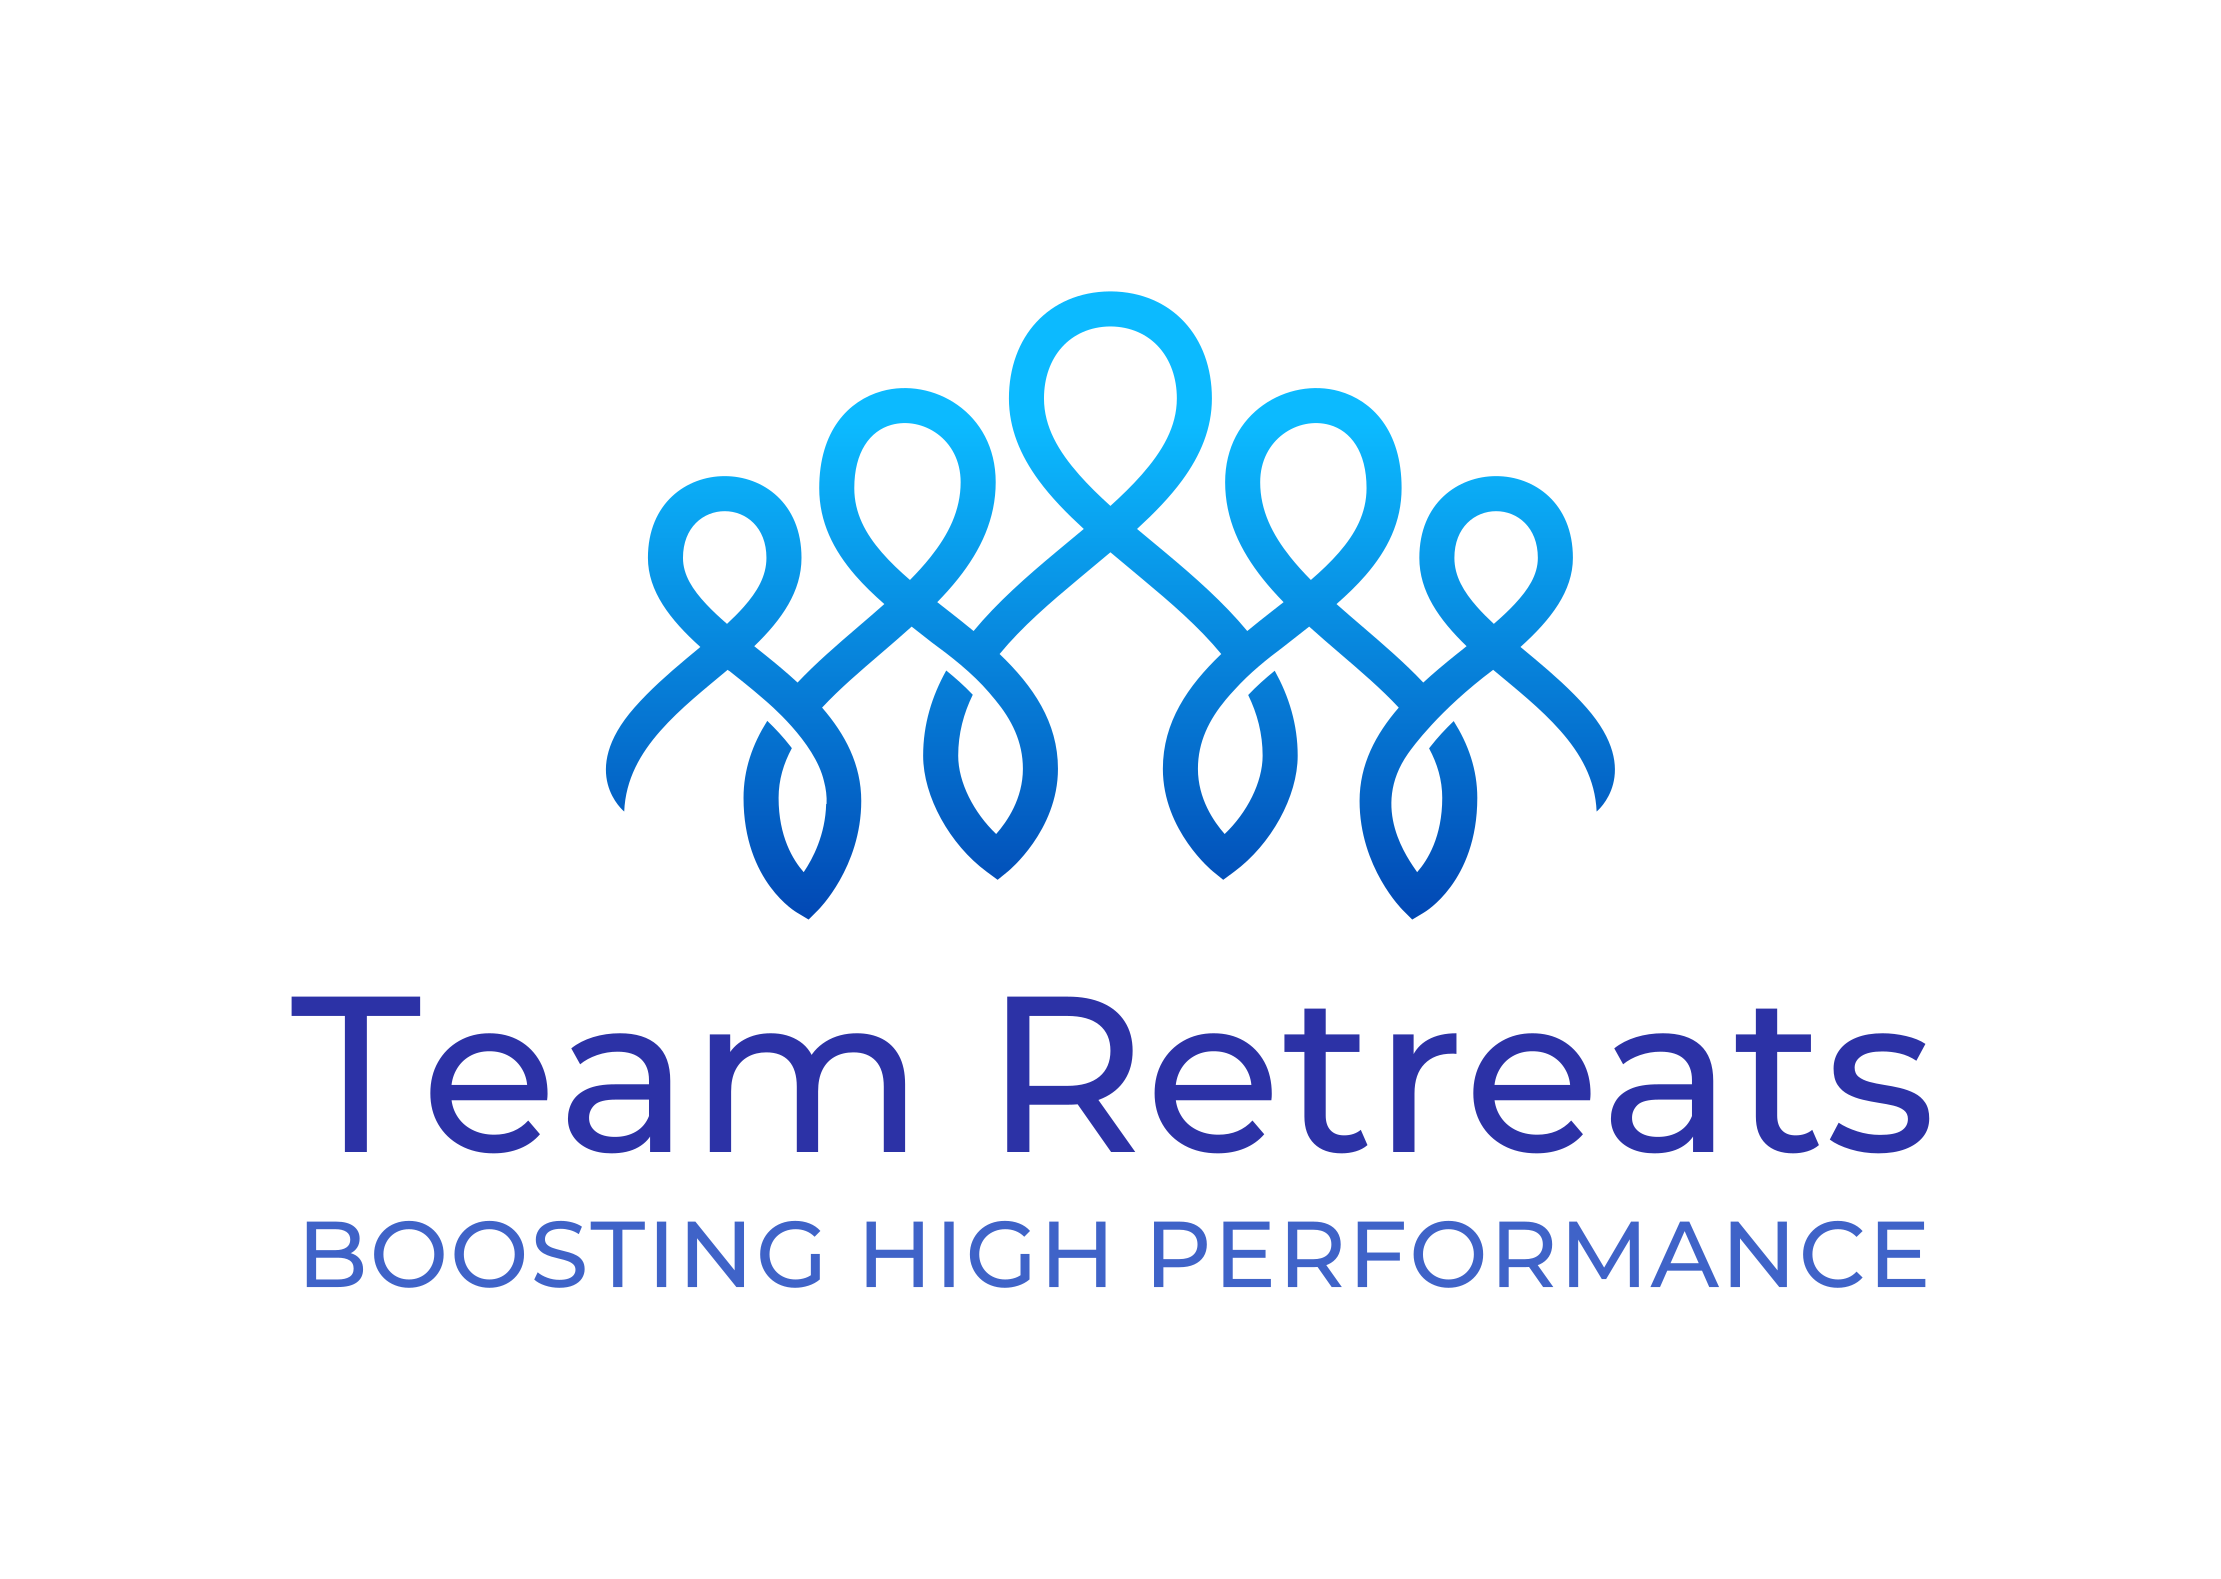 Team Retreats - Teamwork makes the dream work